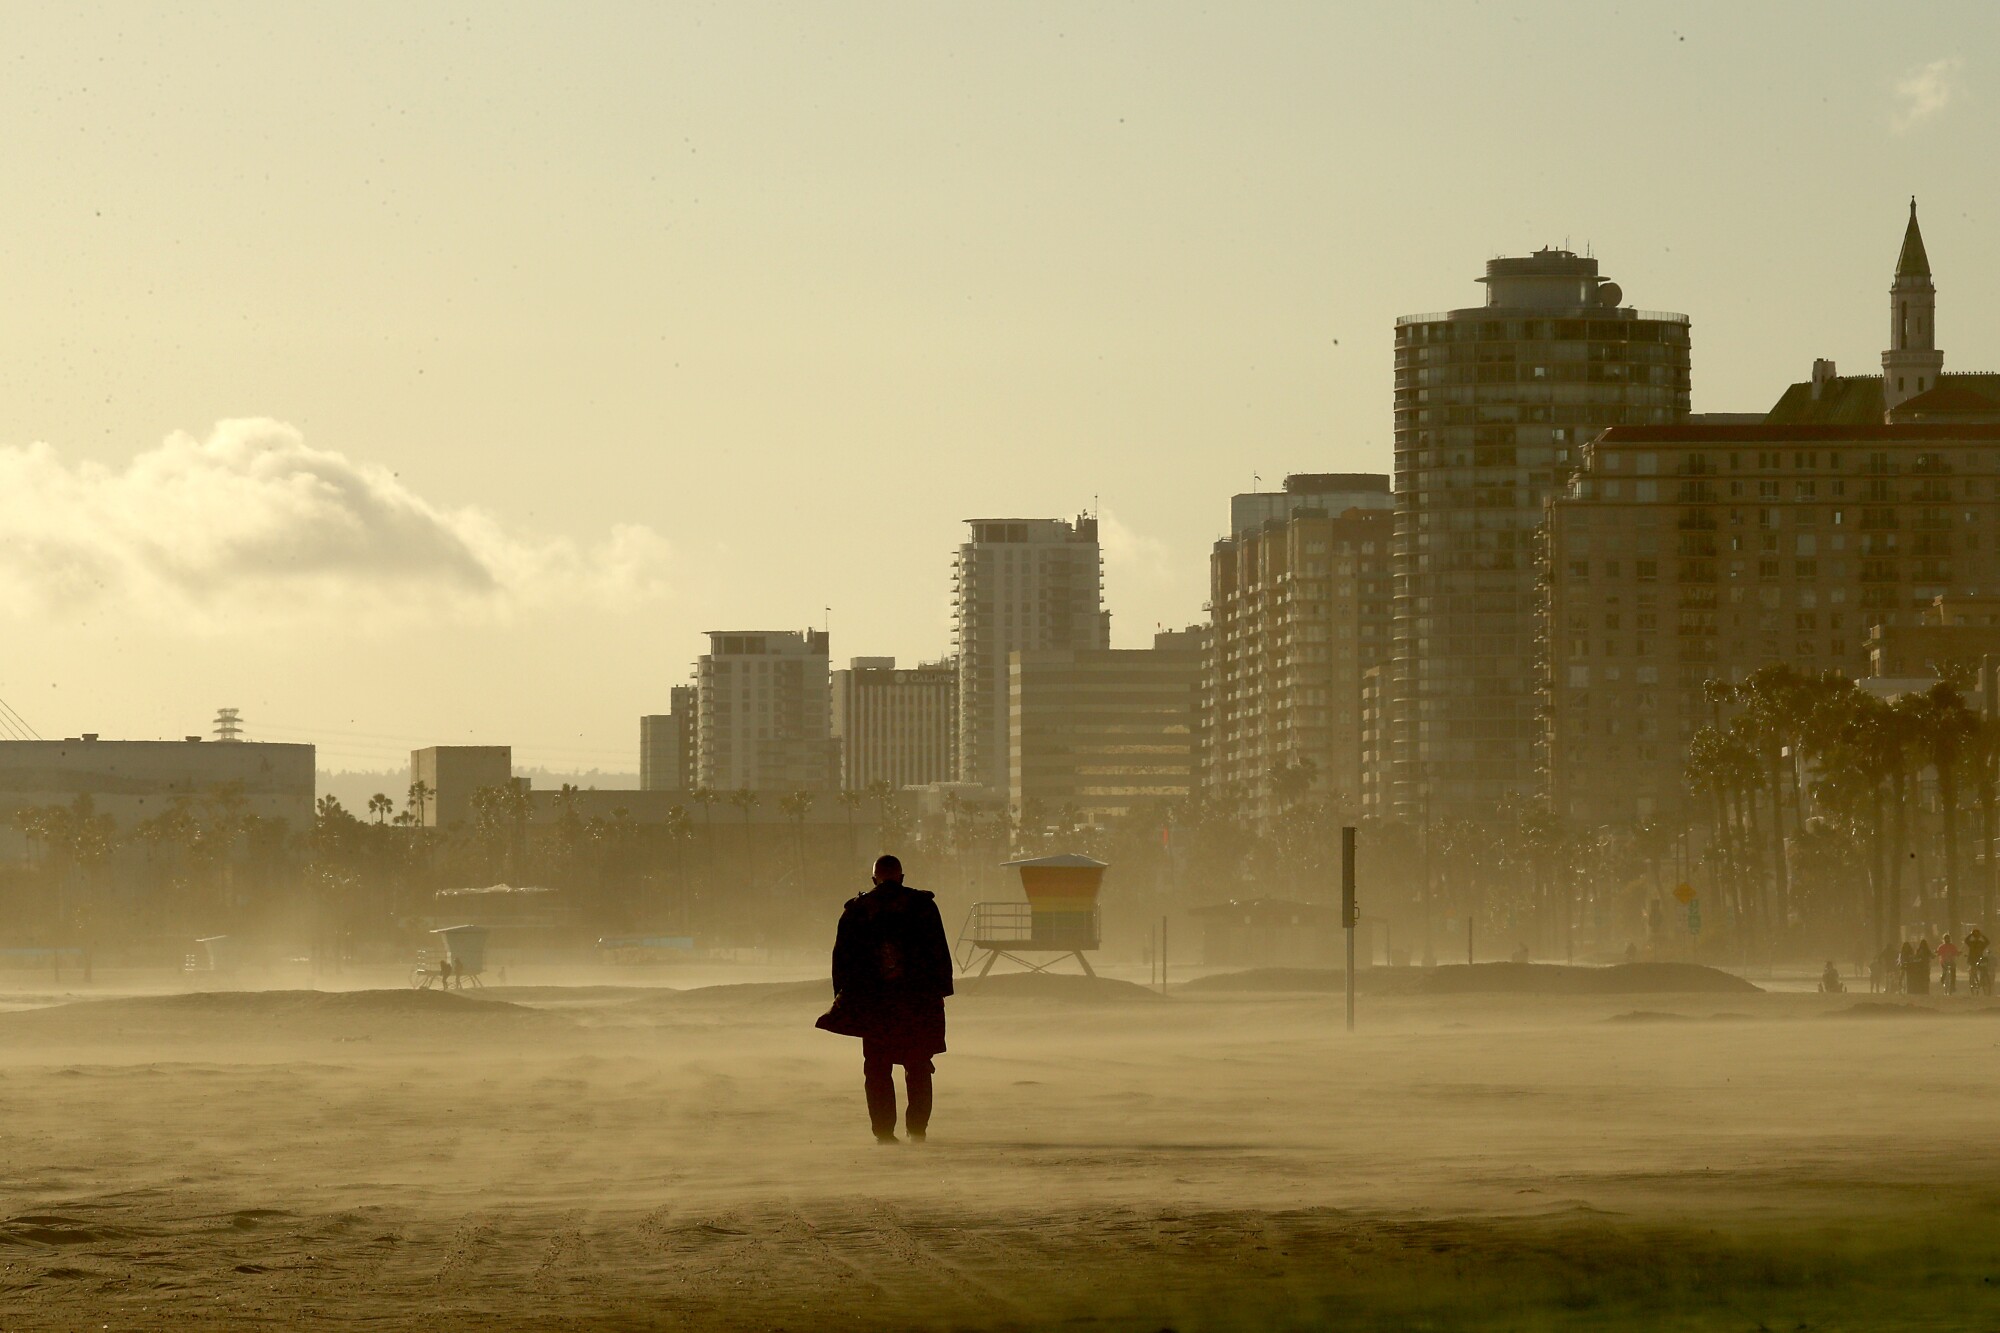 A man walks among clouds of dust on a beach.